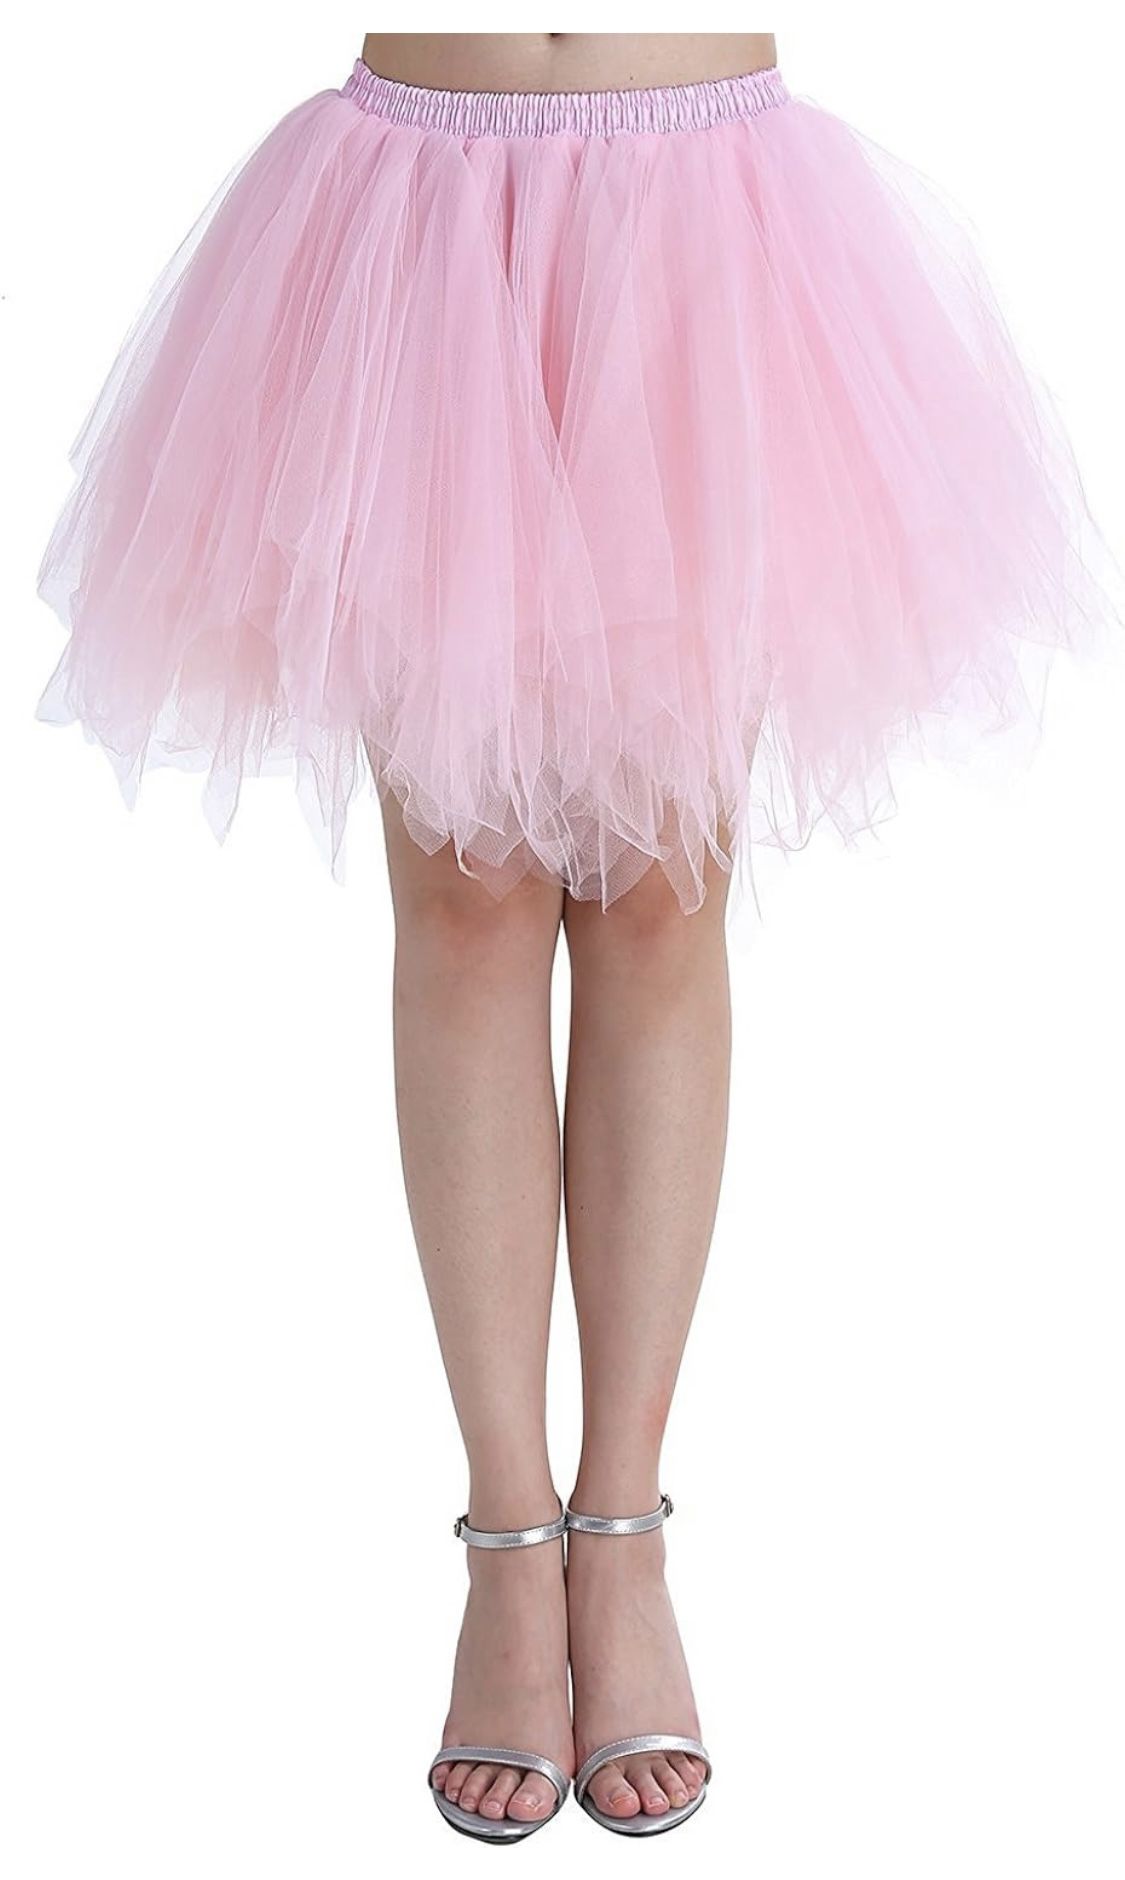 Womens Soild Color Tutu Skirt Layered Tulle Skirt Adult Halloween Costumes